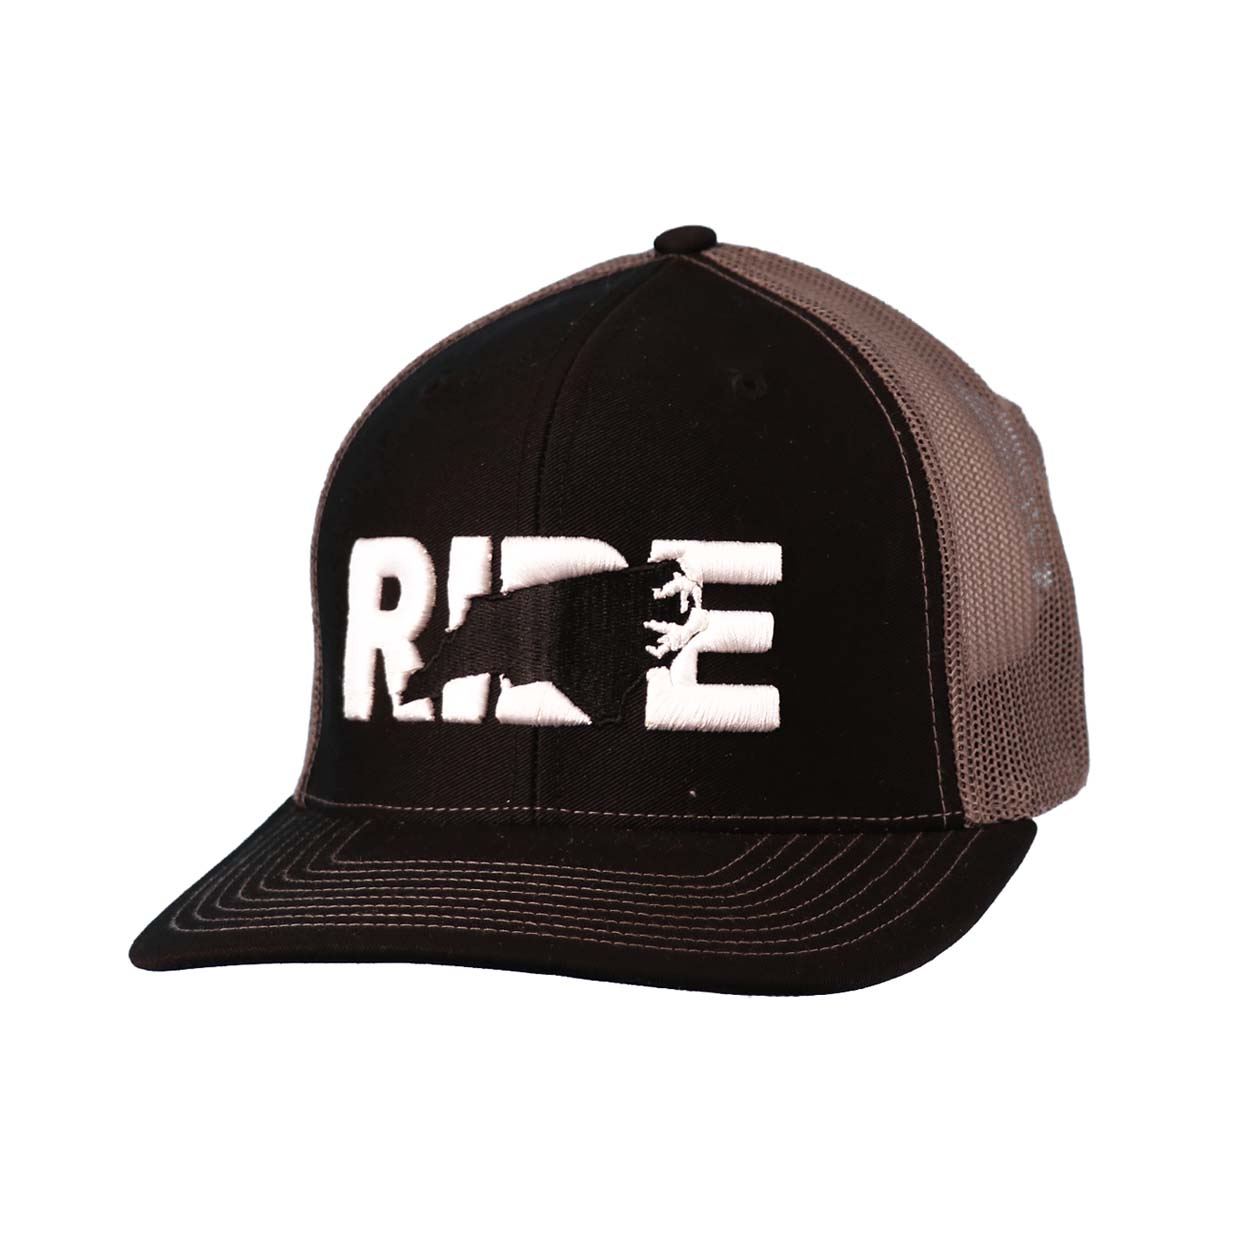 Ride North Carolina Classic Pro 3D Puff Embroidered Snapback Trucker Hat Black/Gray